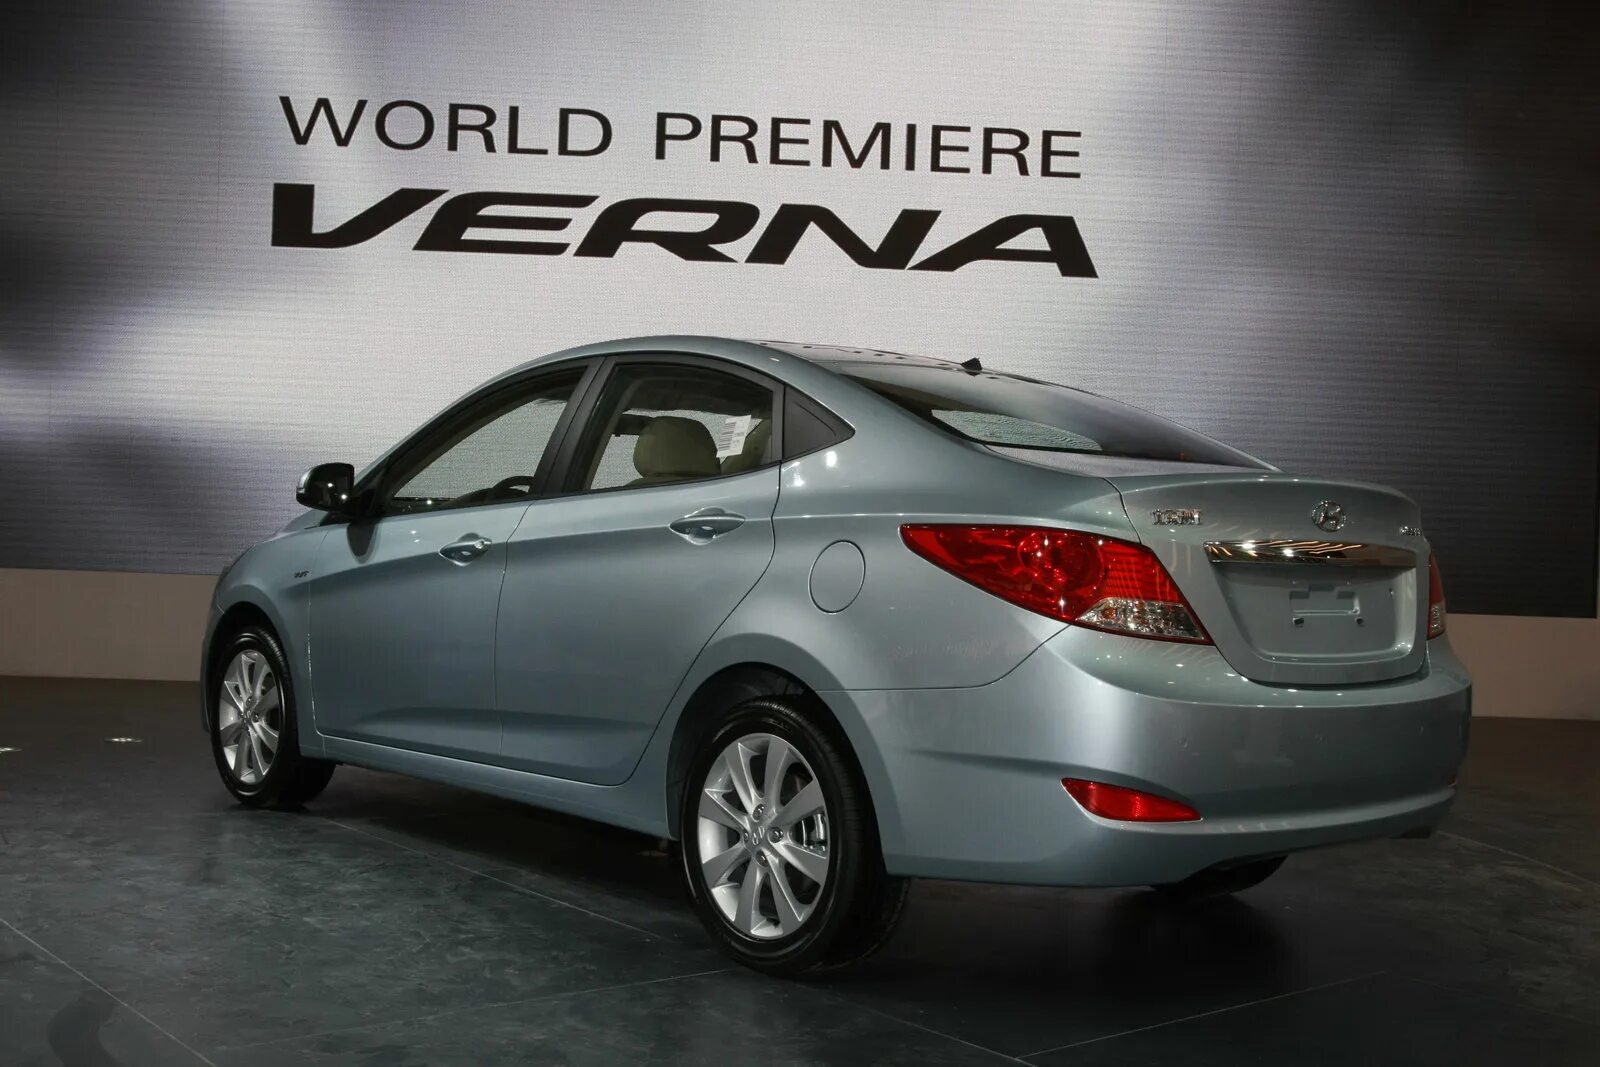 Hyundai Verna (Хендай верна). Hyundai Accent Verna. Hyundai Verna 2012. Hyundai Verna 2010.